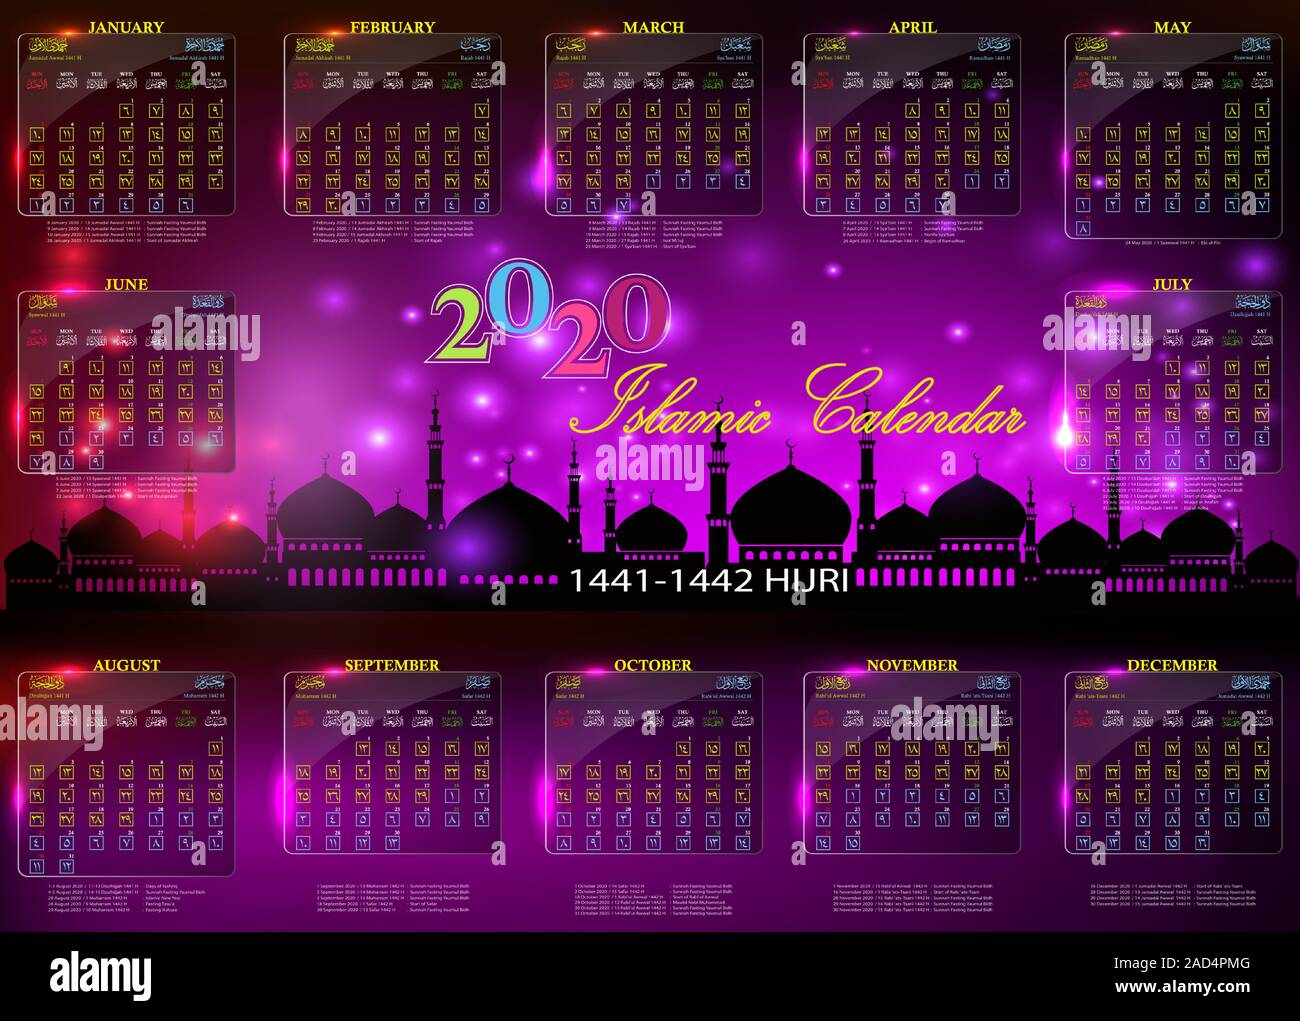 islamic-calendar-2020-1441-1442-hijri-calendar-stock-vector-image